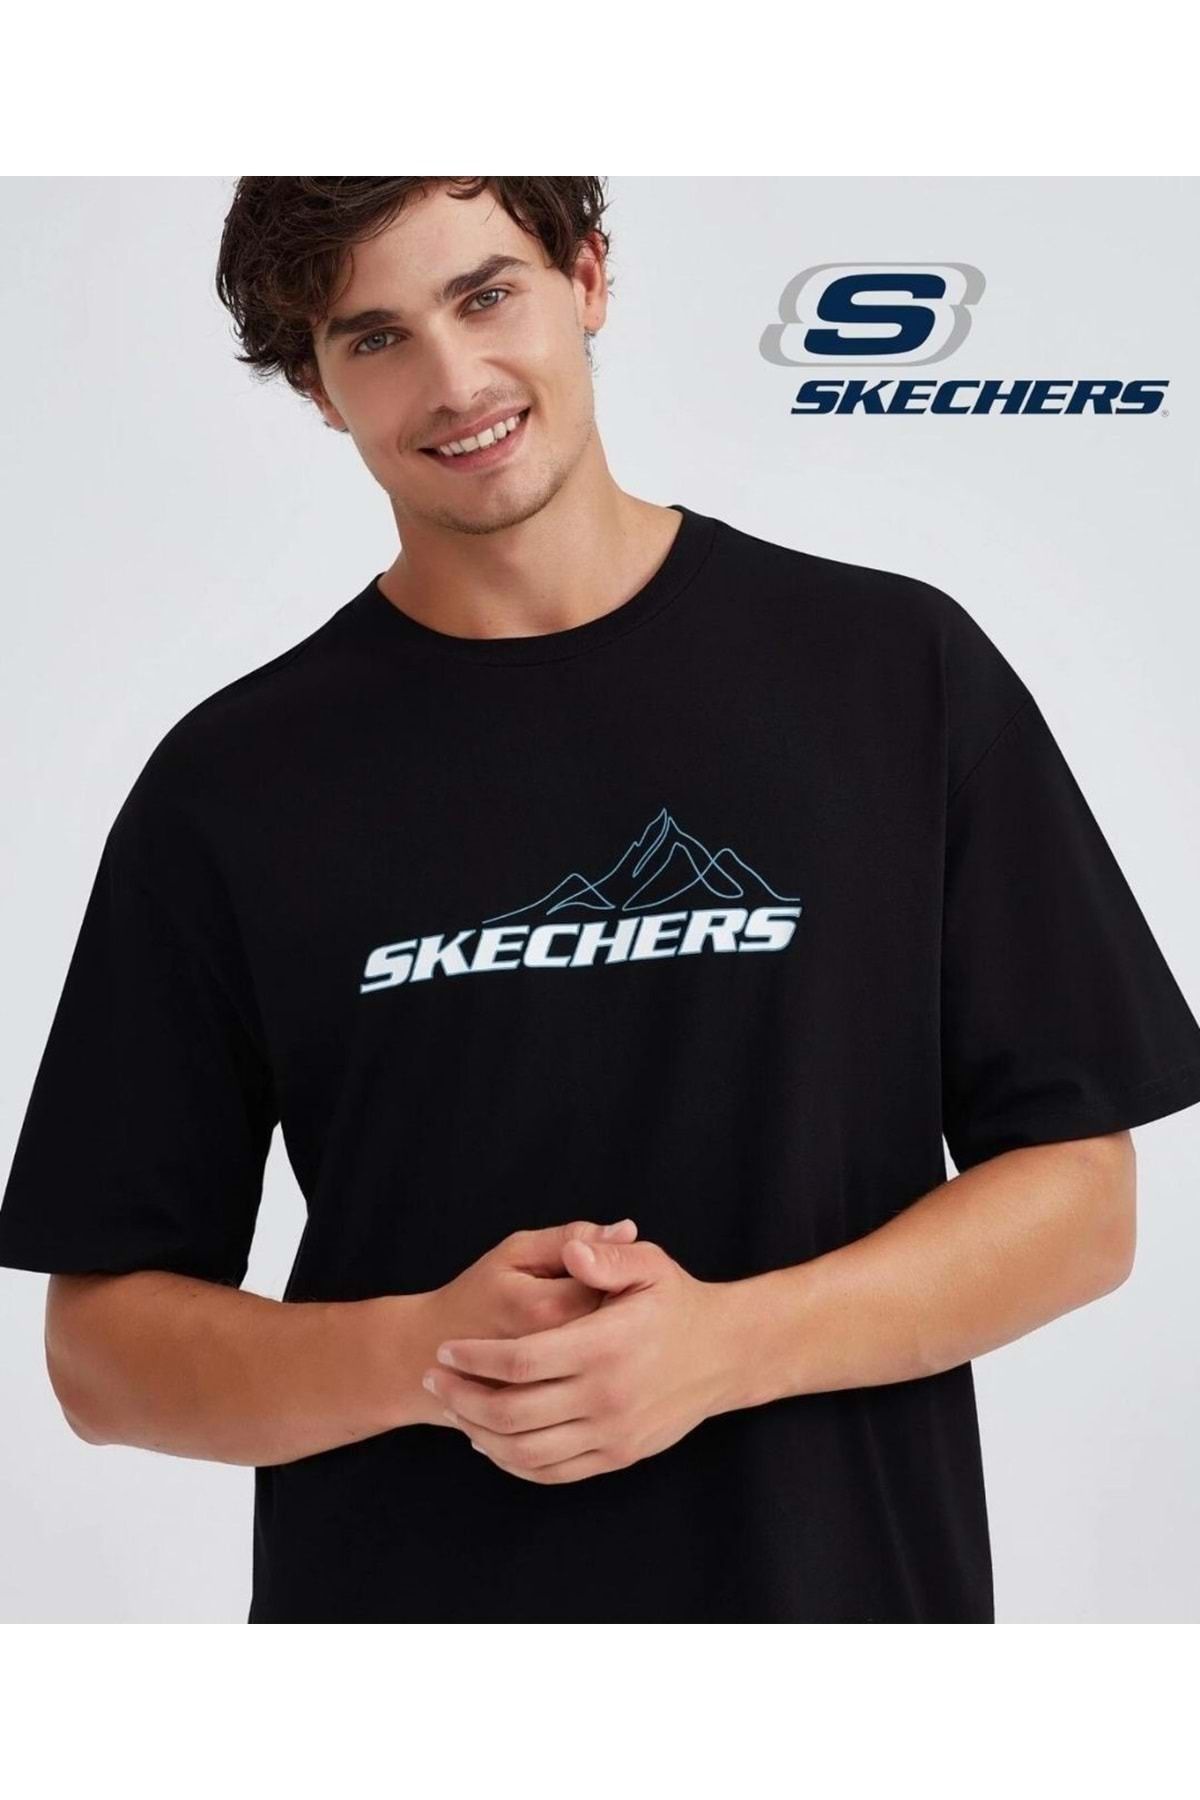 Skechers M Graphic Tee Crew Neck T-shirt S232436-001 Erkek Tişört Siyah